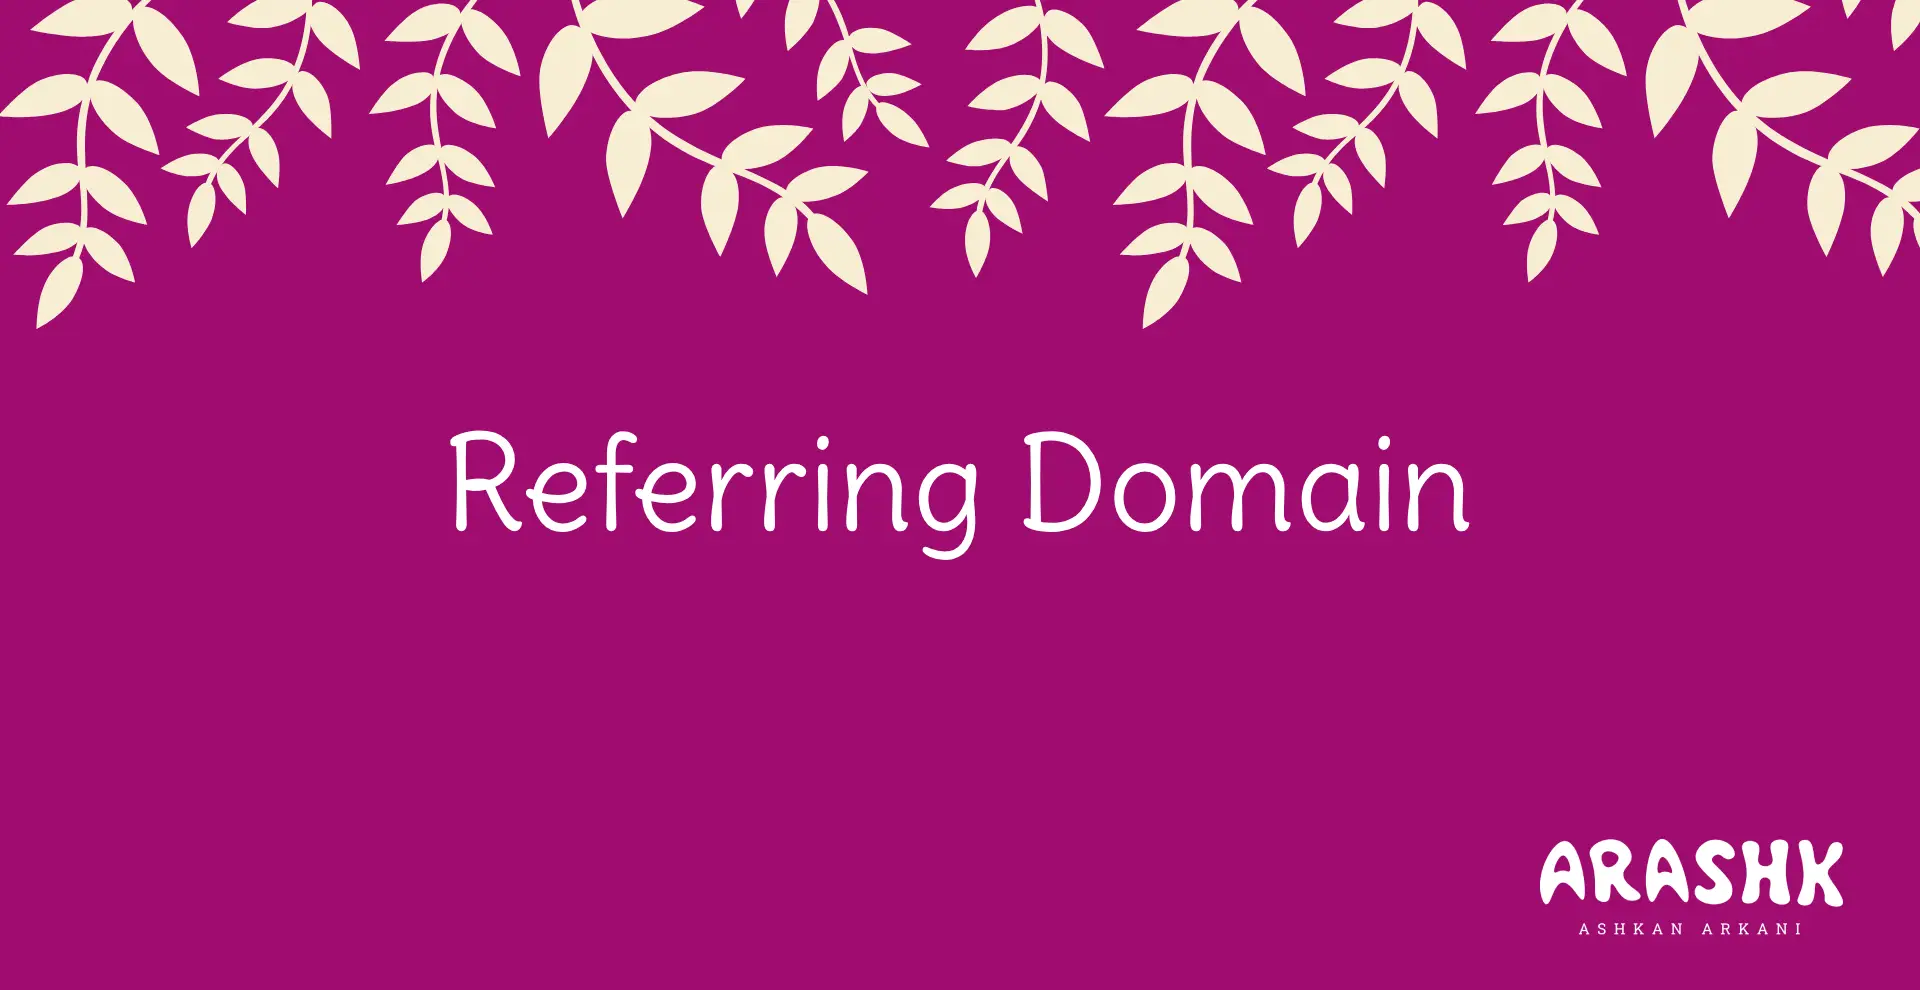 ریفرینگ دامین Referring Domain